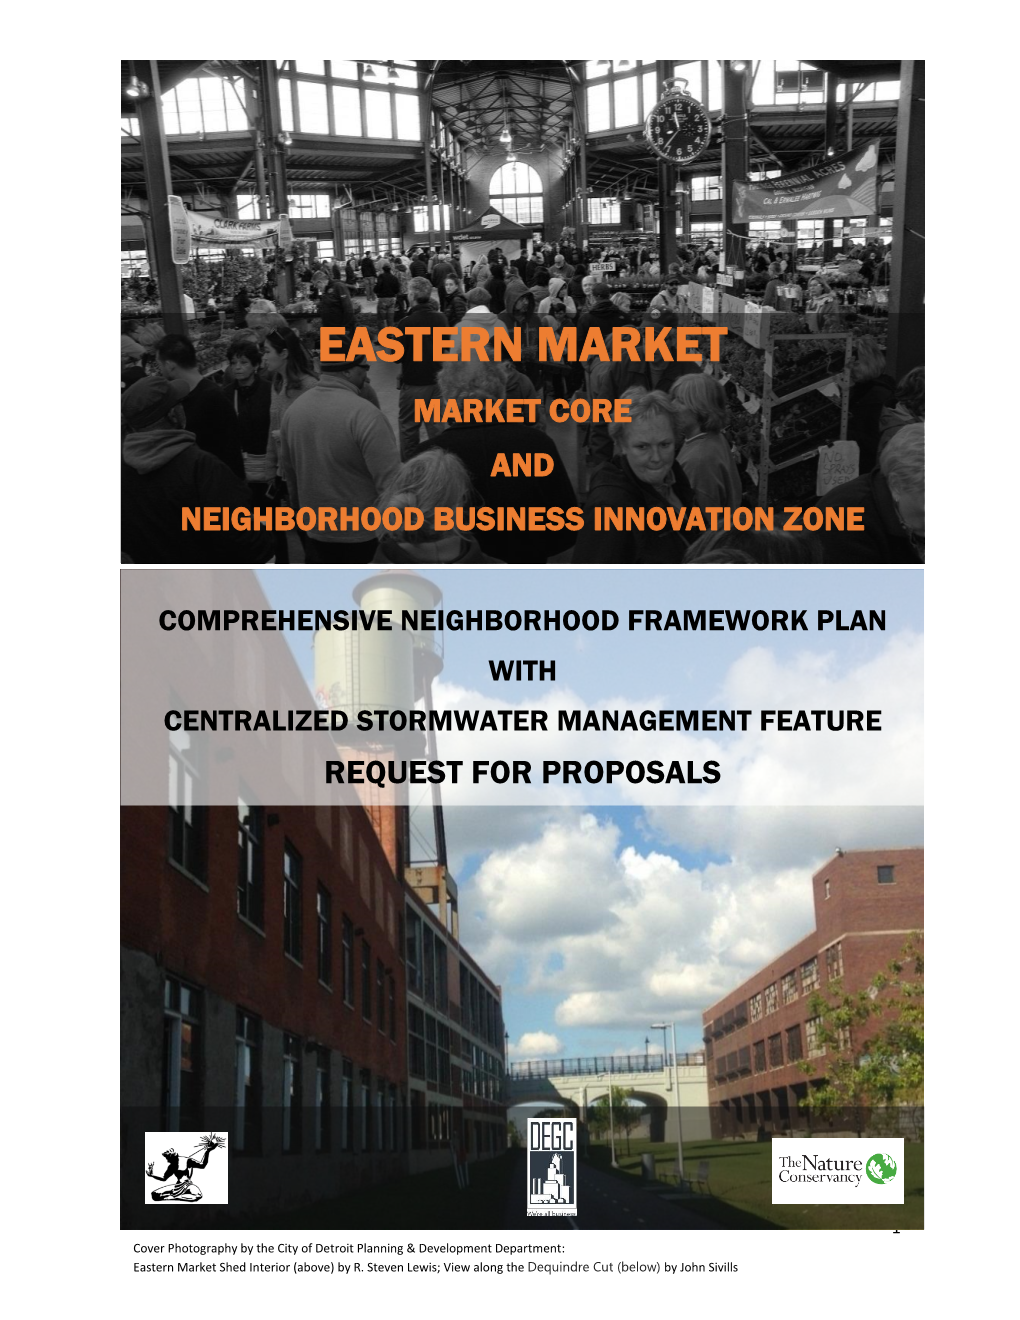 Eastern Market Market Core and Neighborhood Business Innovation Zone